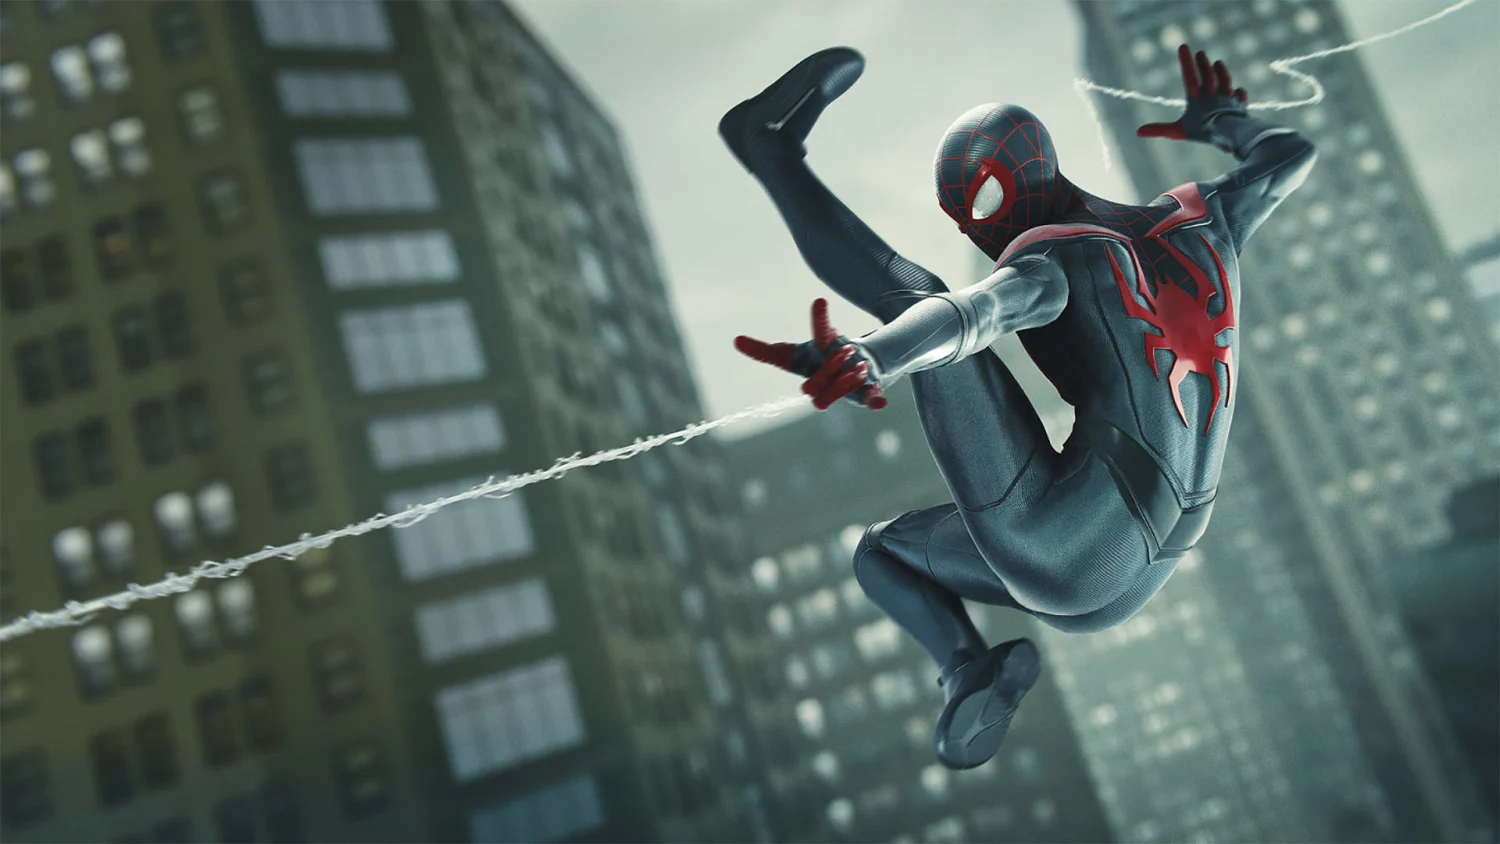 Jogo Marvel Spider Man Miles Morales PS5